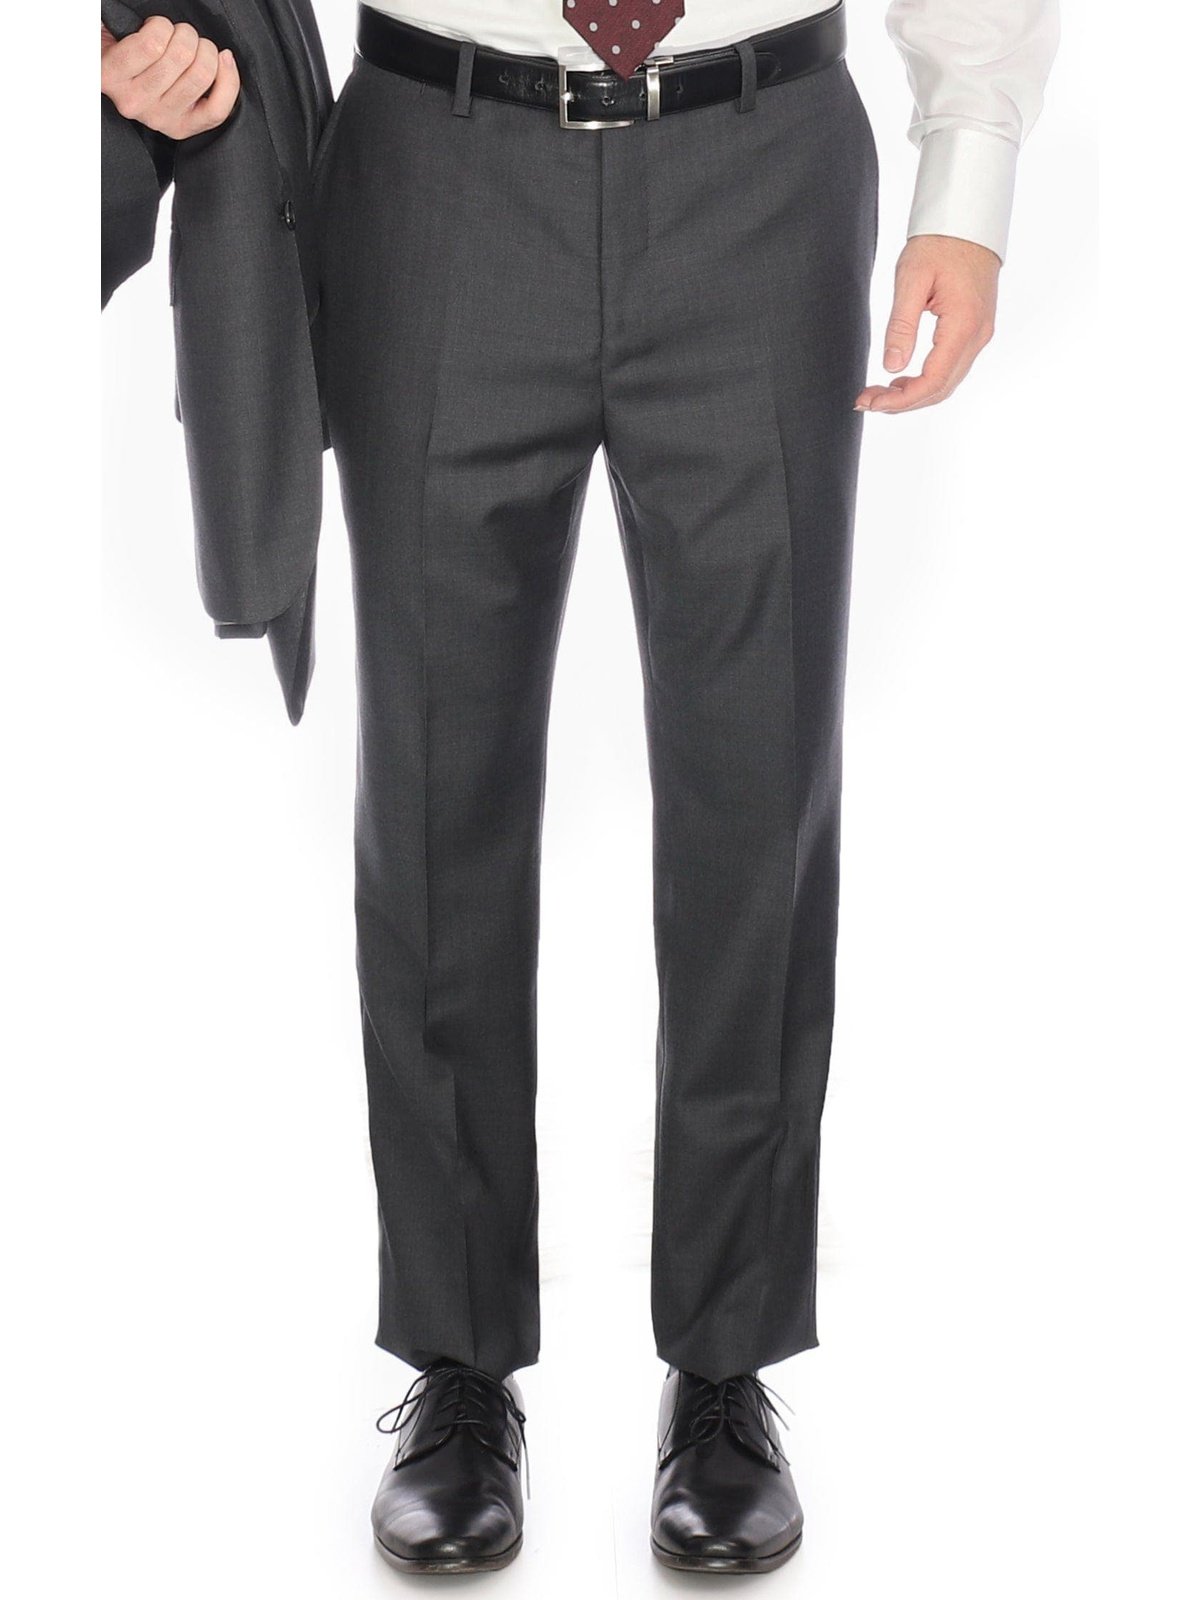 Blujacket Mens Charcoal Gray 100% Italian Reda Wool Regular Fit Suit